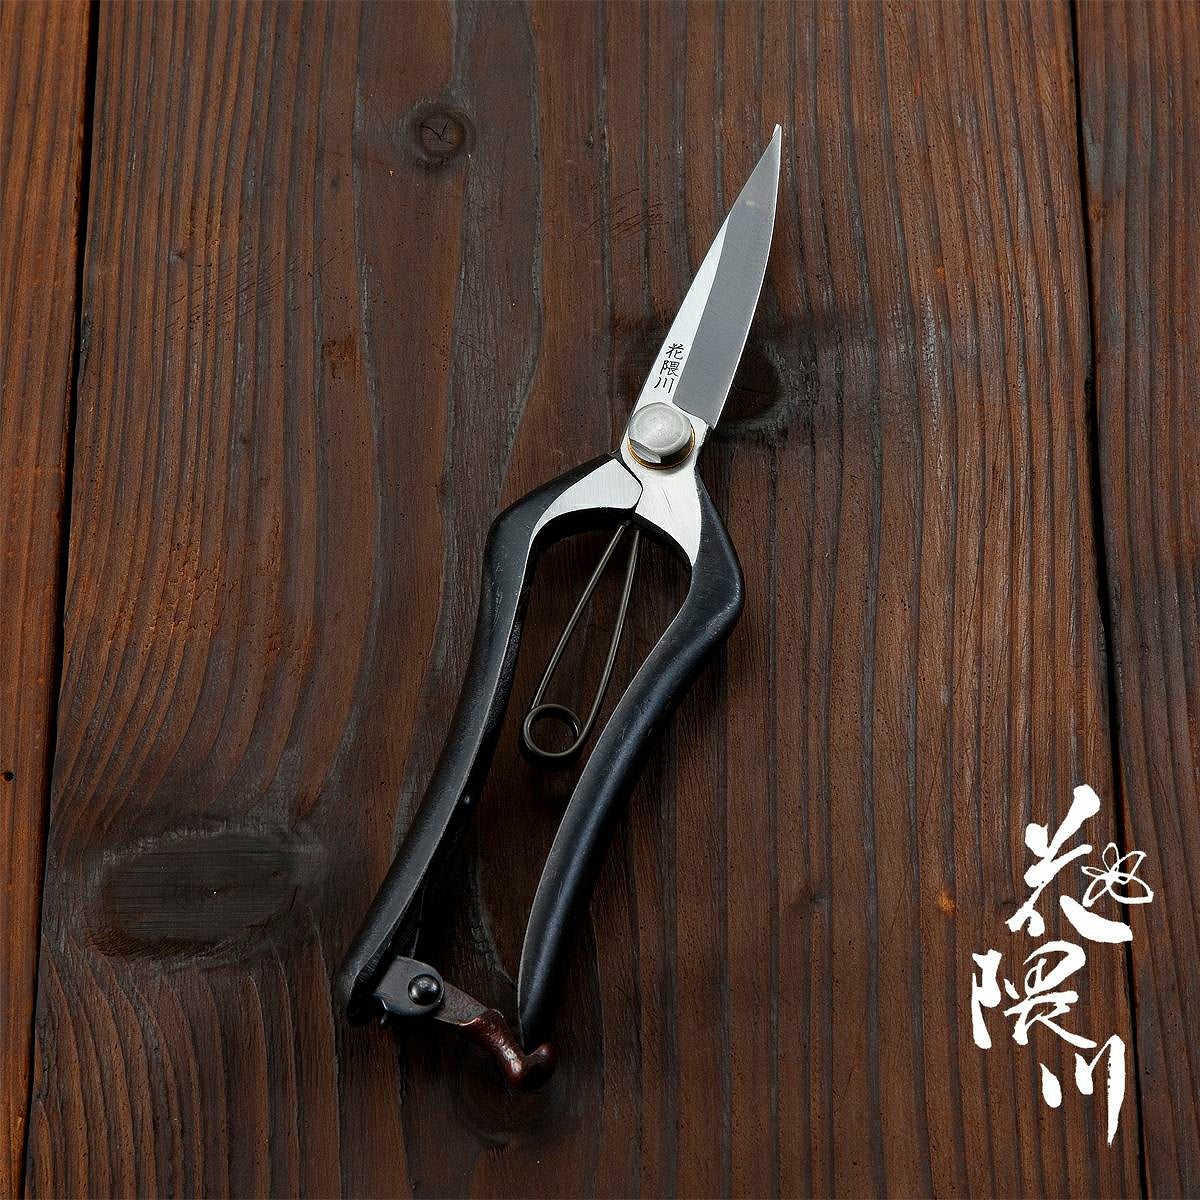 HONMAMON “HANAKUMAGAWA” Japanese Bud-Cutting Shears 200mm(abt 7.9") for Bonsai, Pruning, Single Bevel